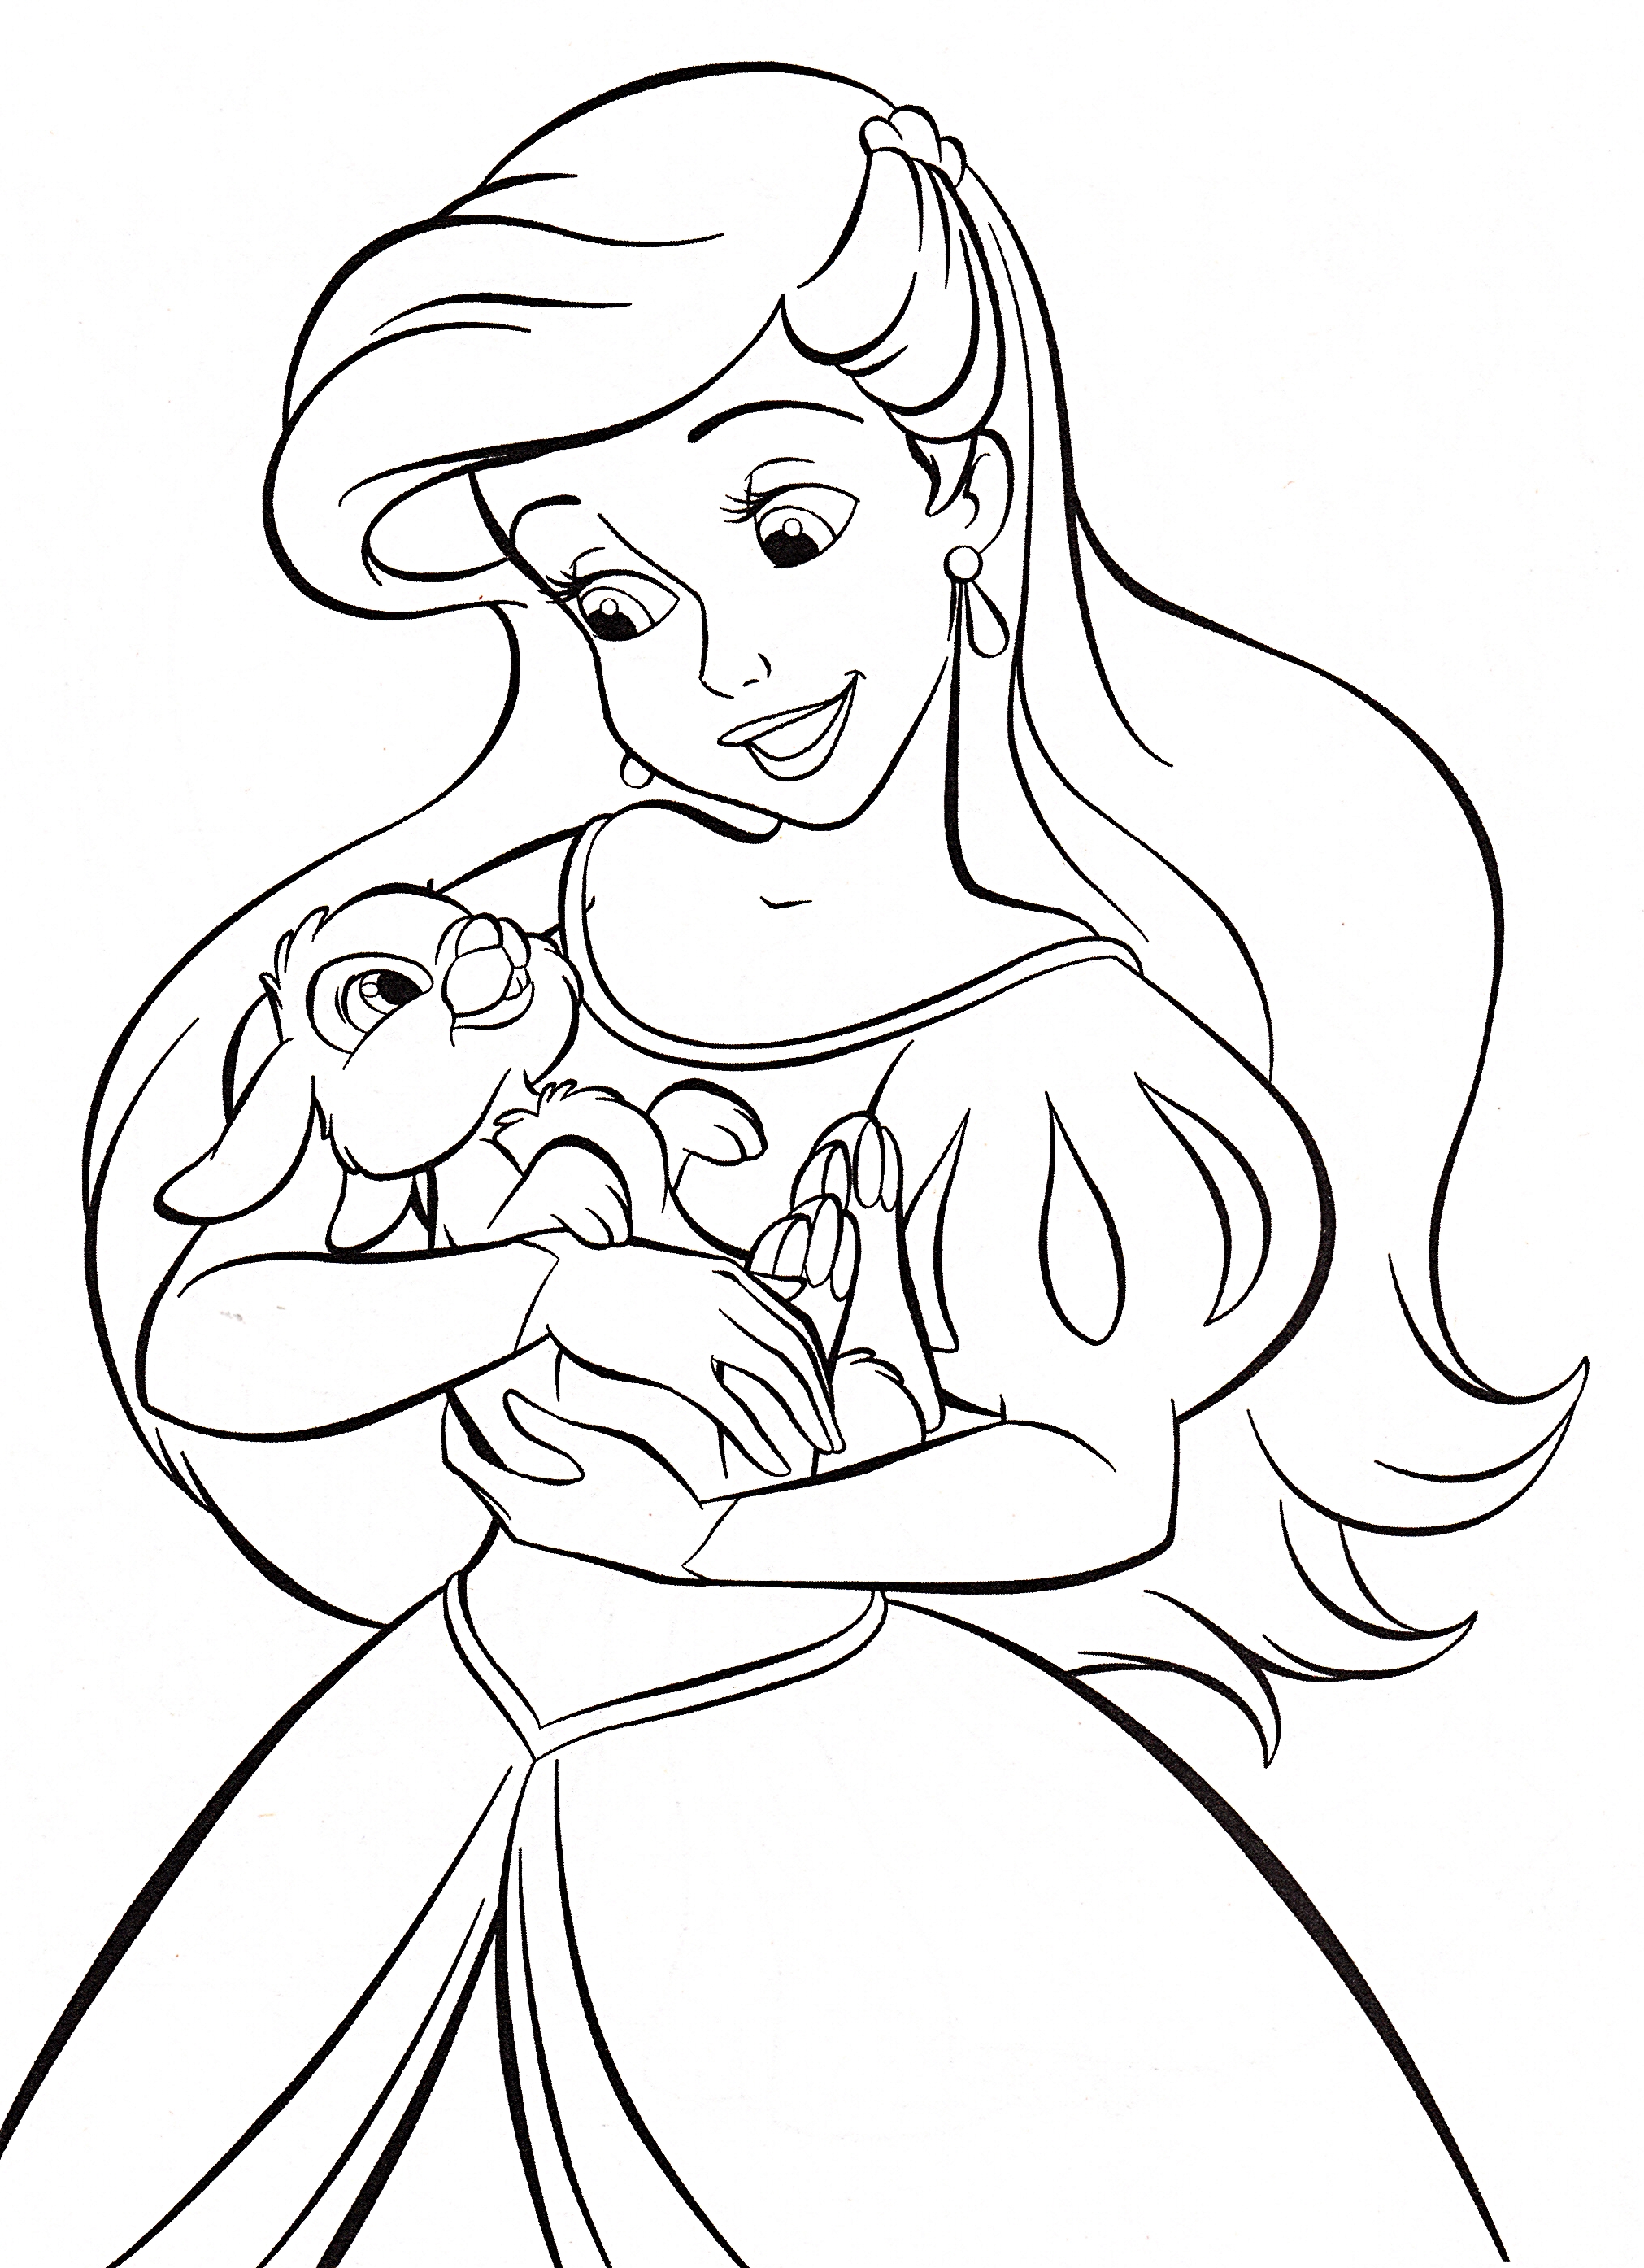 Walt disney Coloring Pages - Princess Ariel - personajes de walt disney foto (37121247) - fanpop